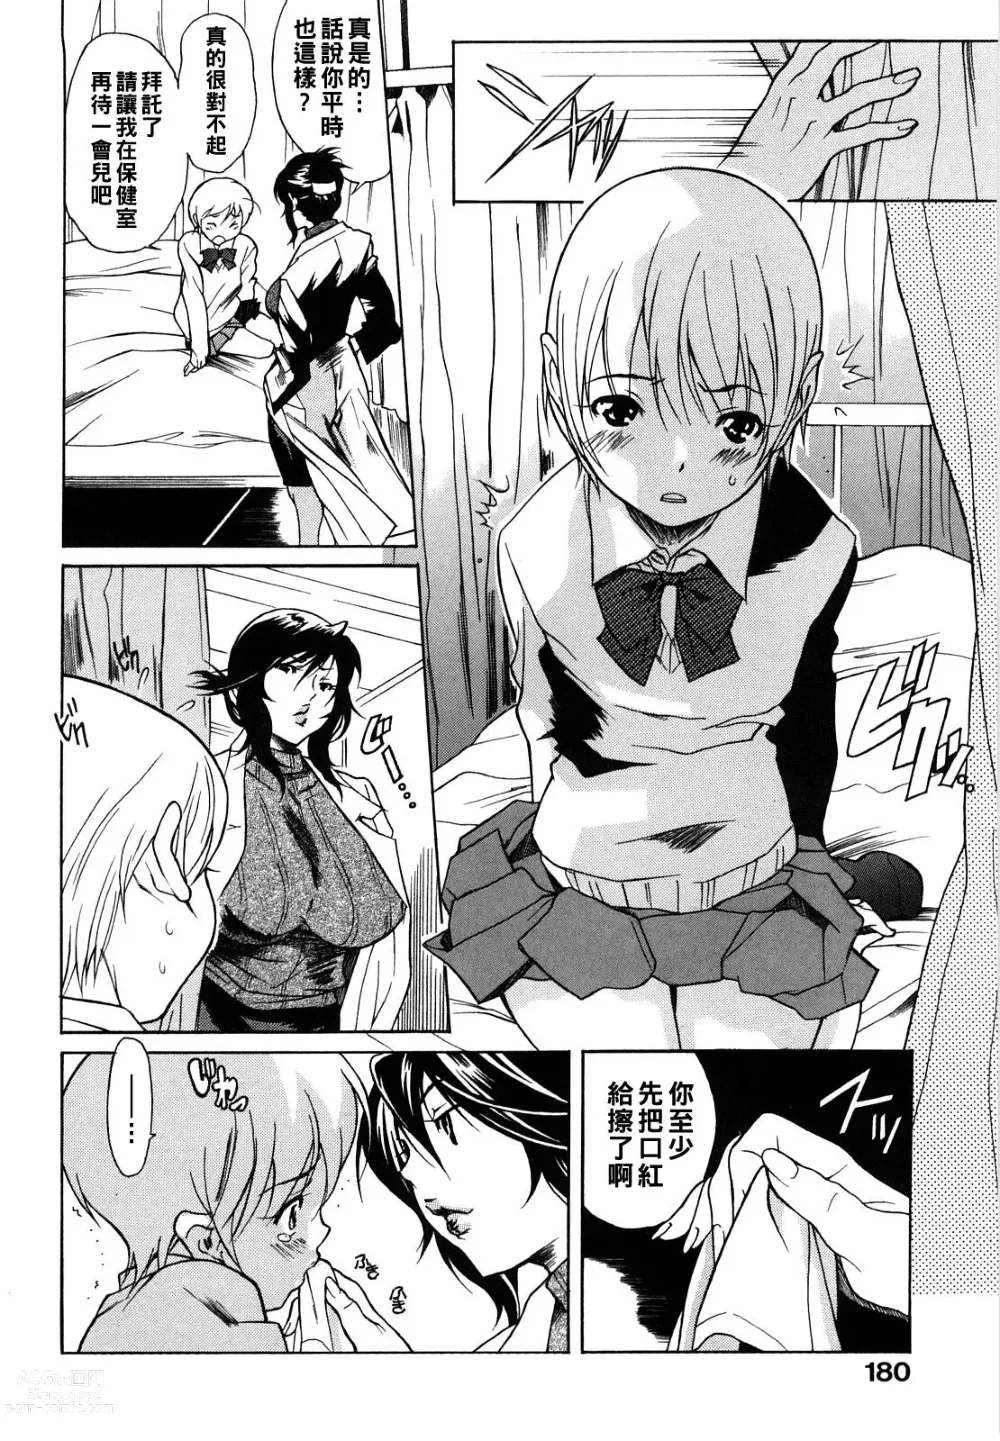 Page 2 of manga Ijirarekko